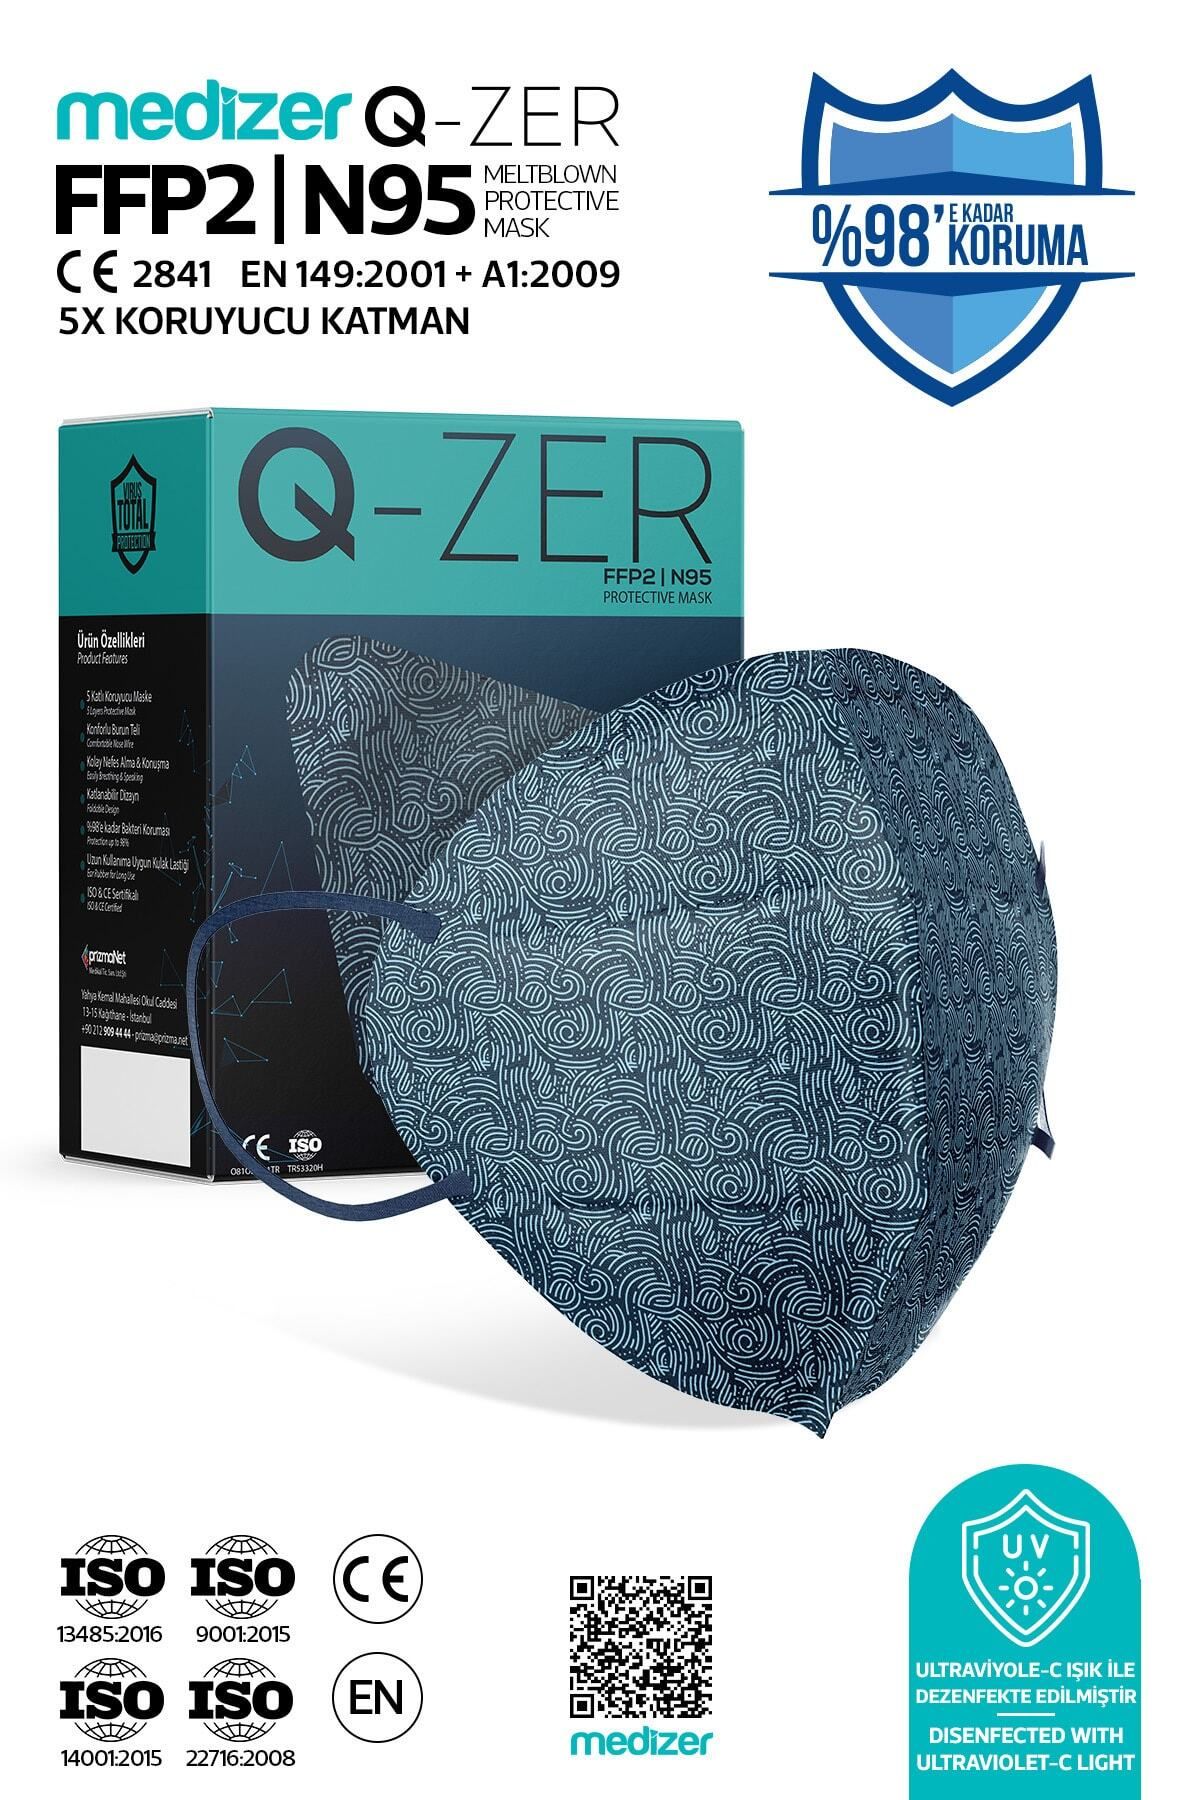 Medizer Qzer Lacivert Dalga Desenli N95 Maske 10 Adet